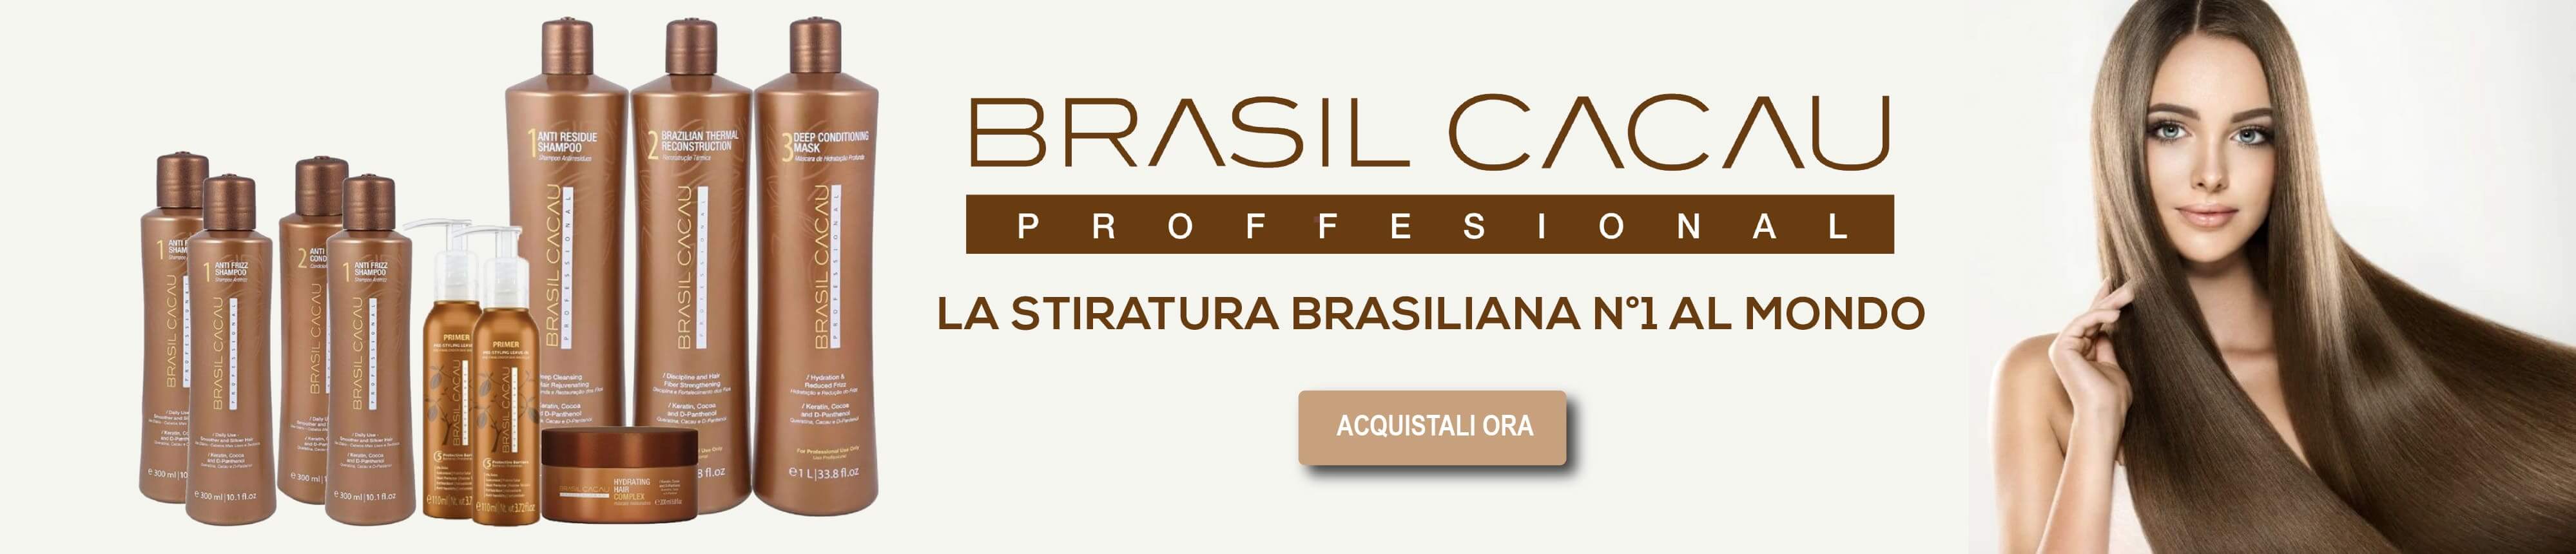 Prodotti Brasil Cacau Professional